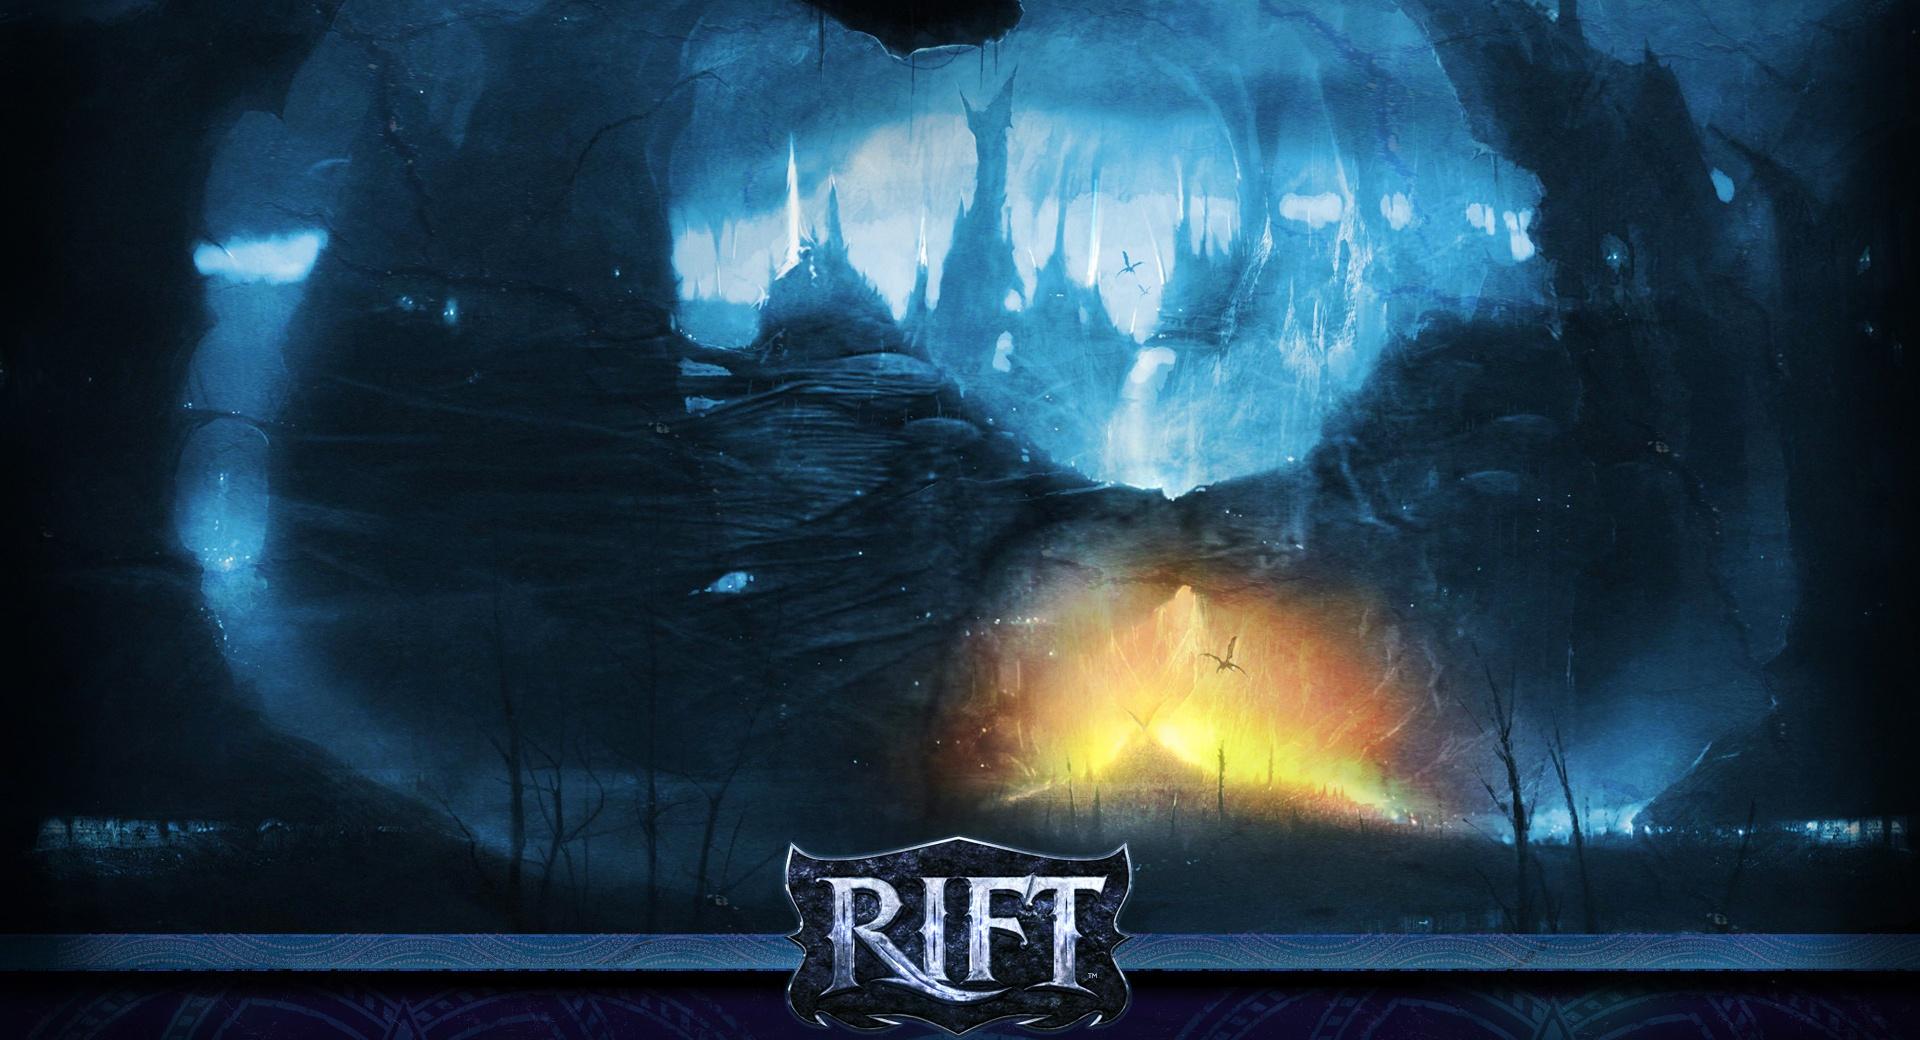 Rift Concept Art wallpapers HD quality